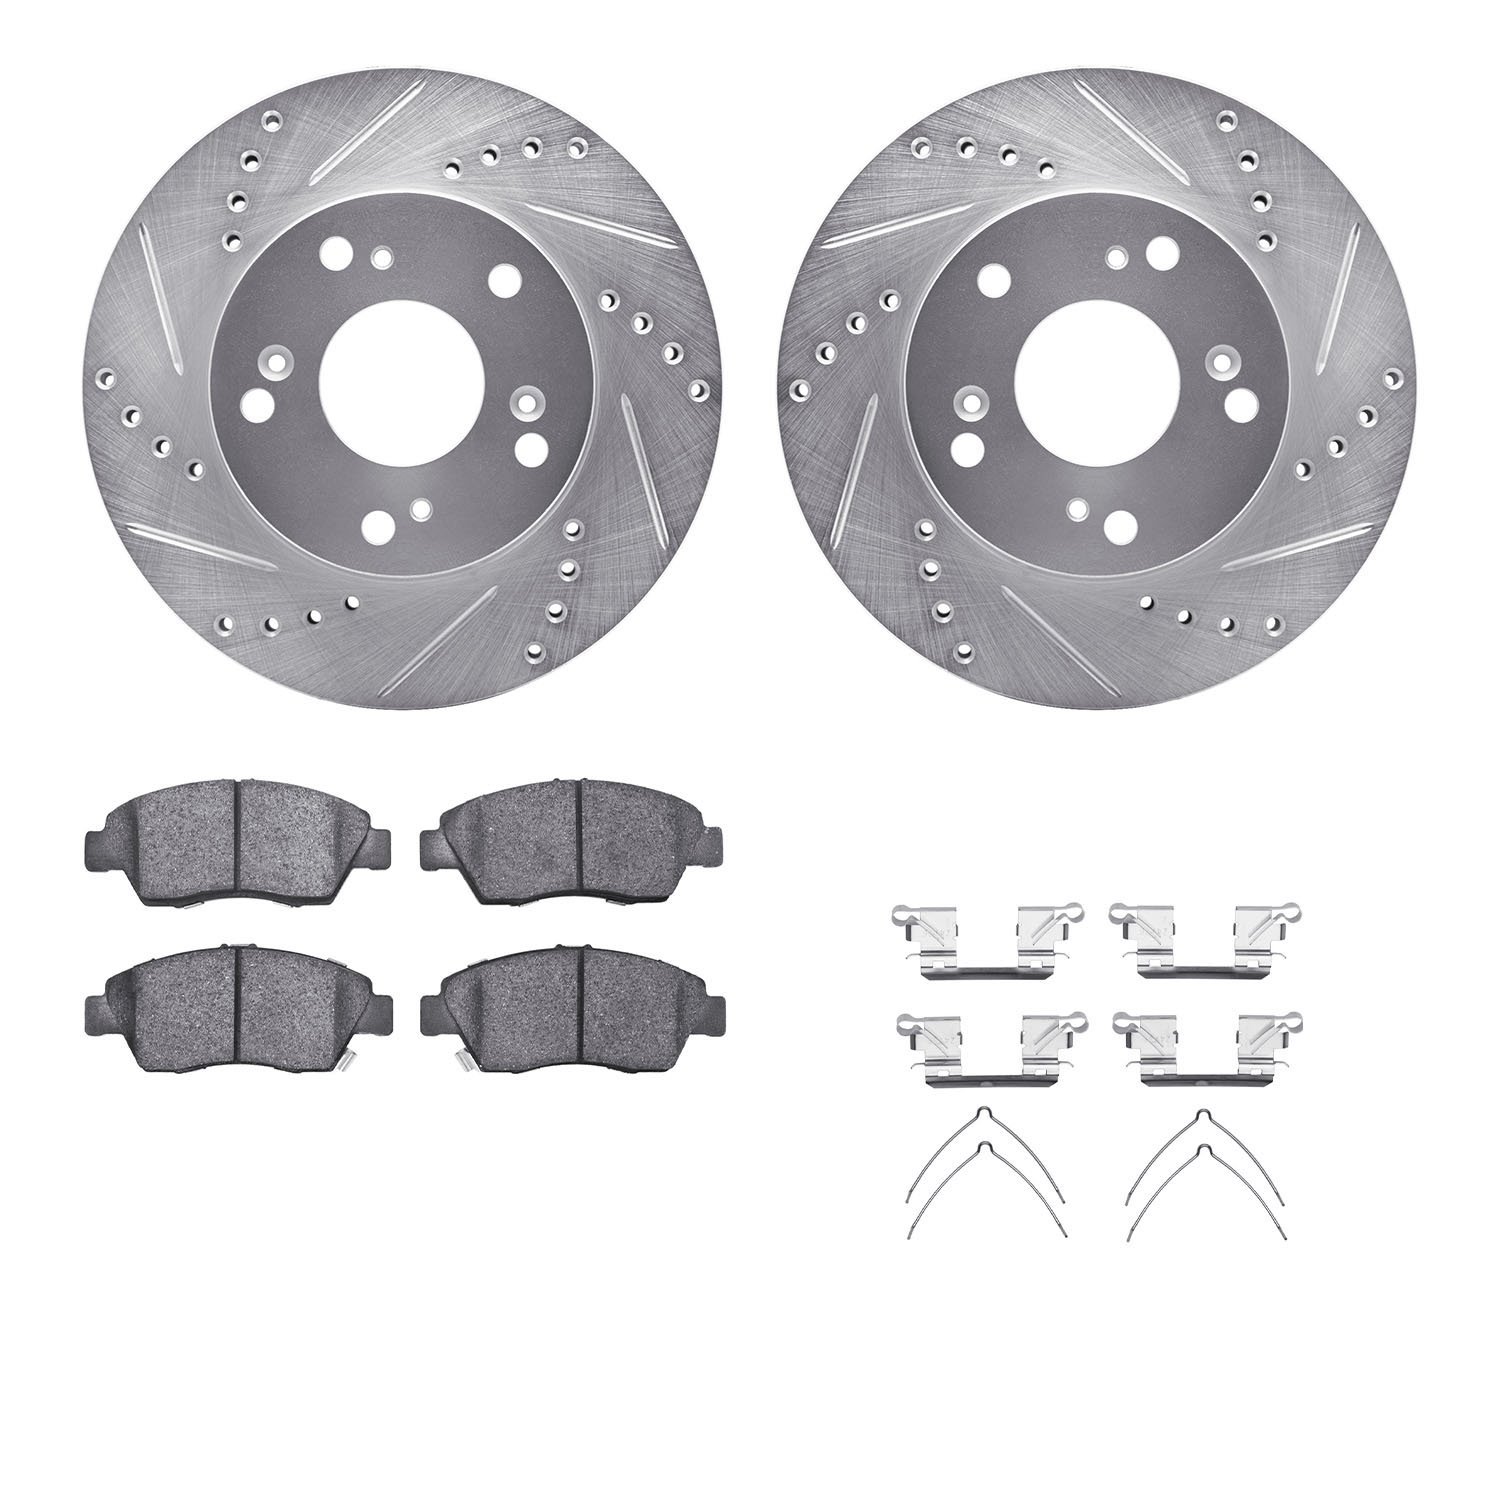 7312-59073 Drilled/Slotted Brake Rotor with 3000-Series Ceramic Brake Pads Kit & Hardware [Silver], 2012-2015 Acura/Honda, Posit